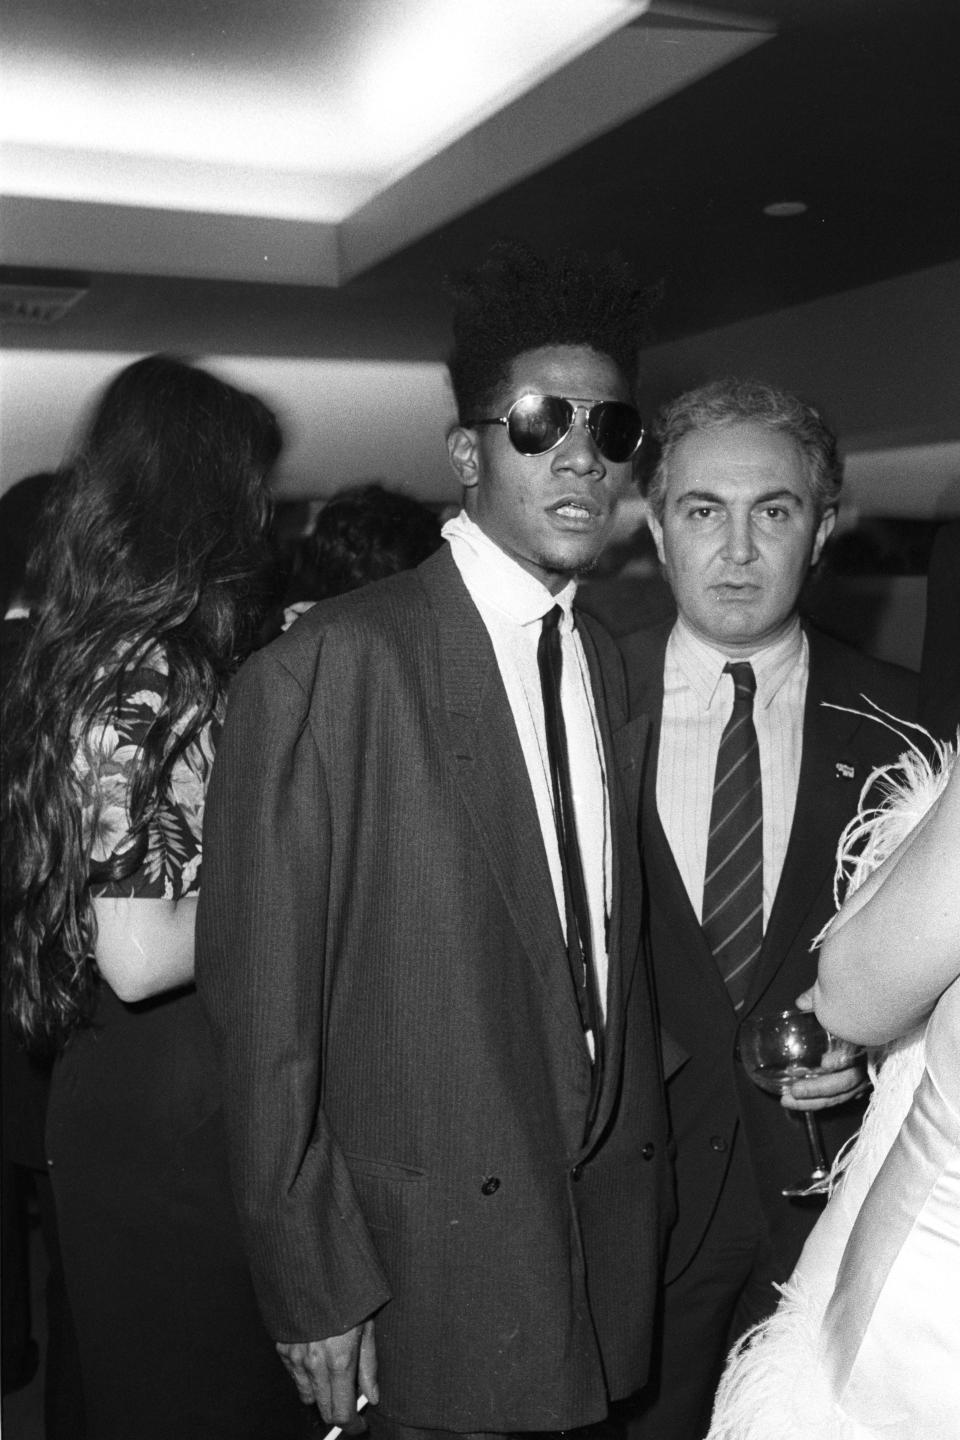 Jean-Michel Basquiat in suit.